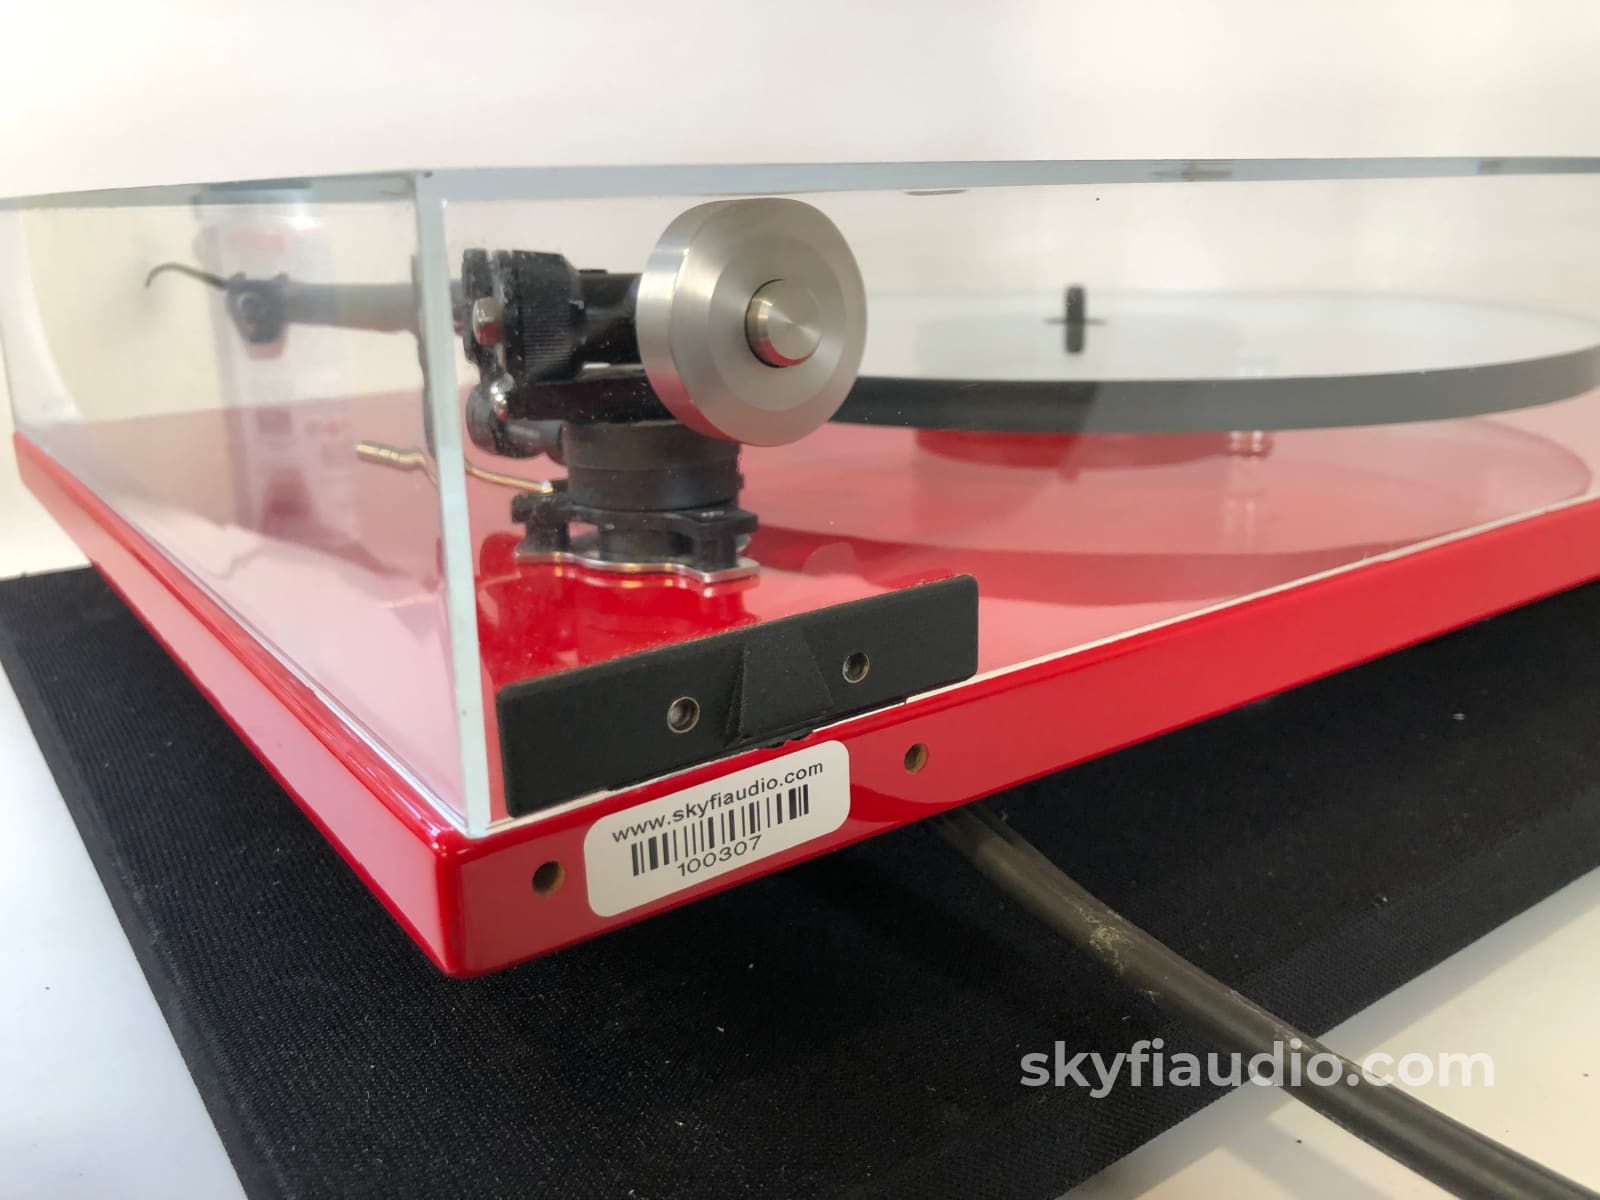 Rega Planar 3 (P3) Turntable With New Sumiko Amethyst Cartridge